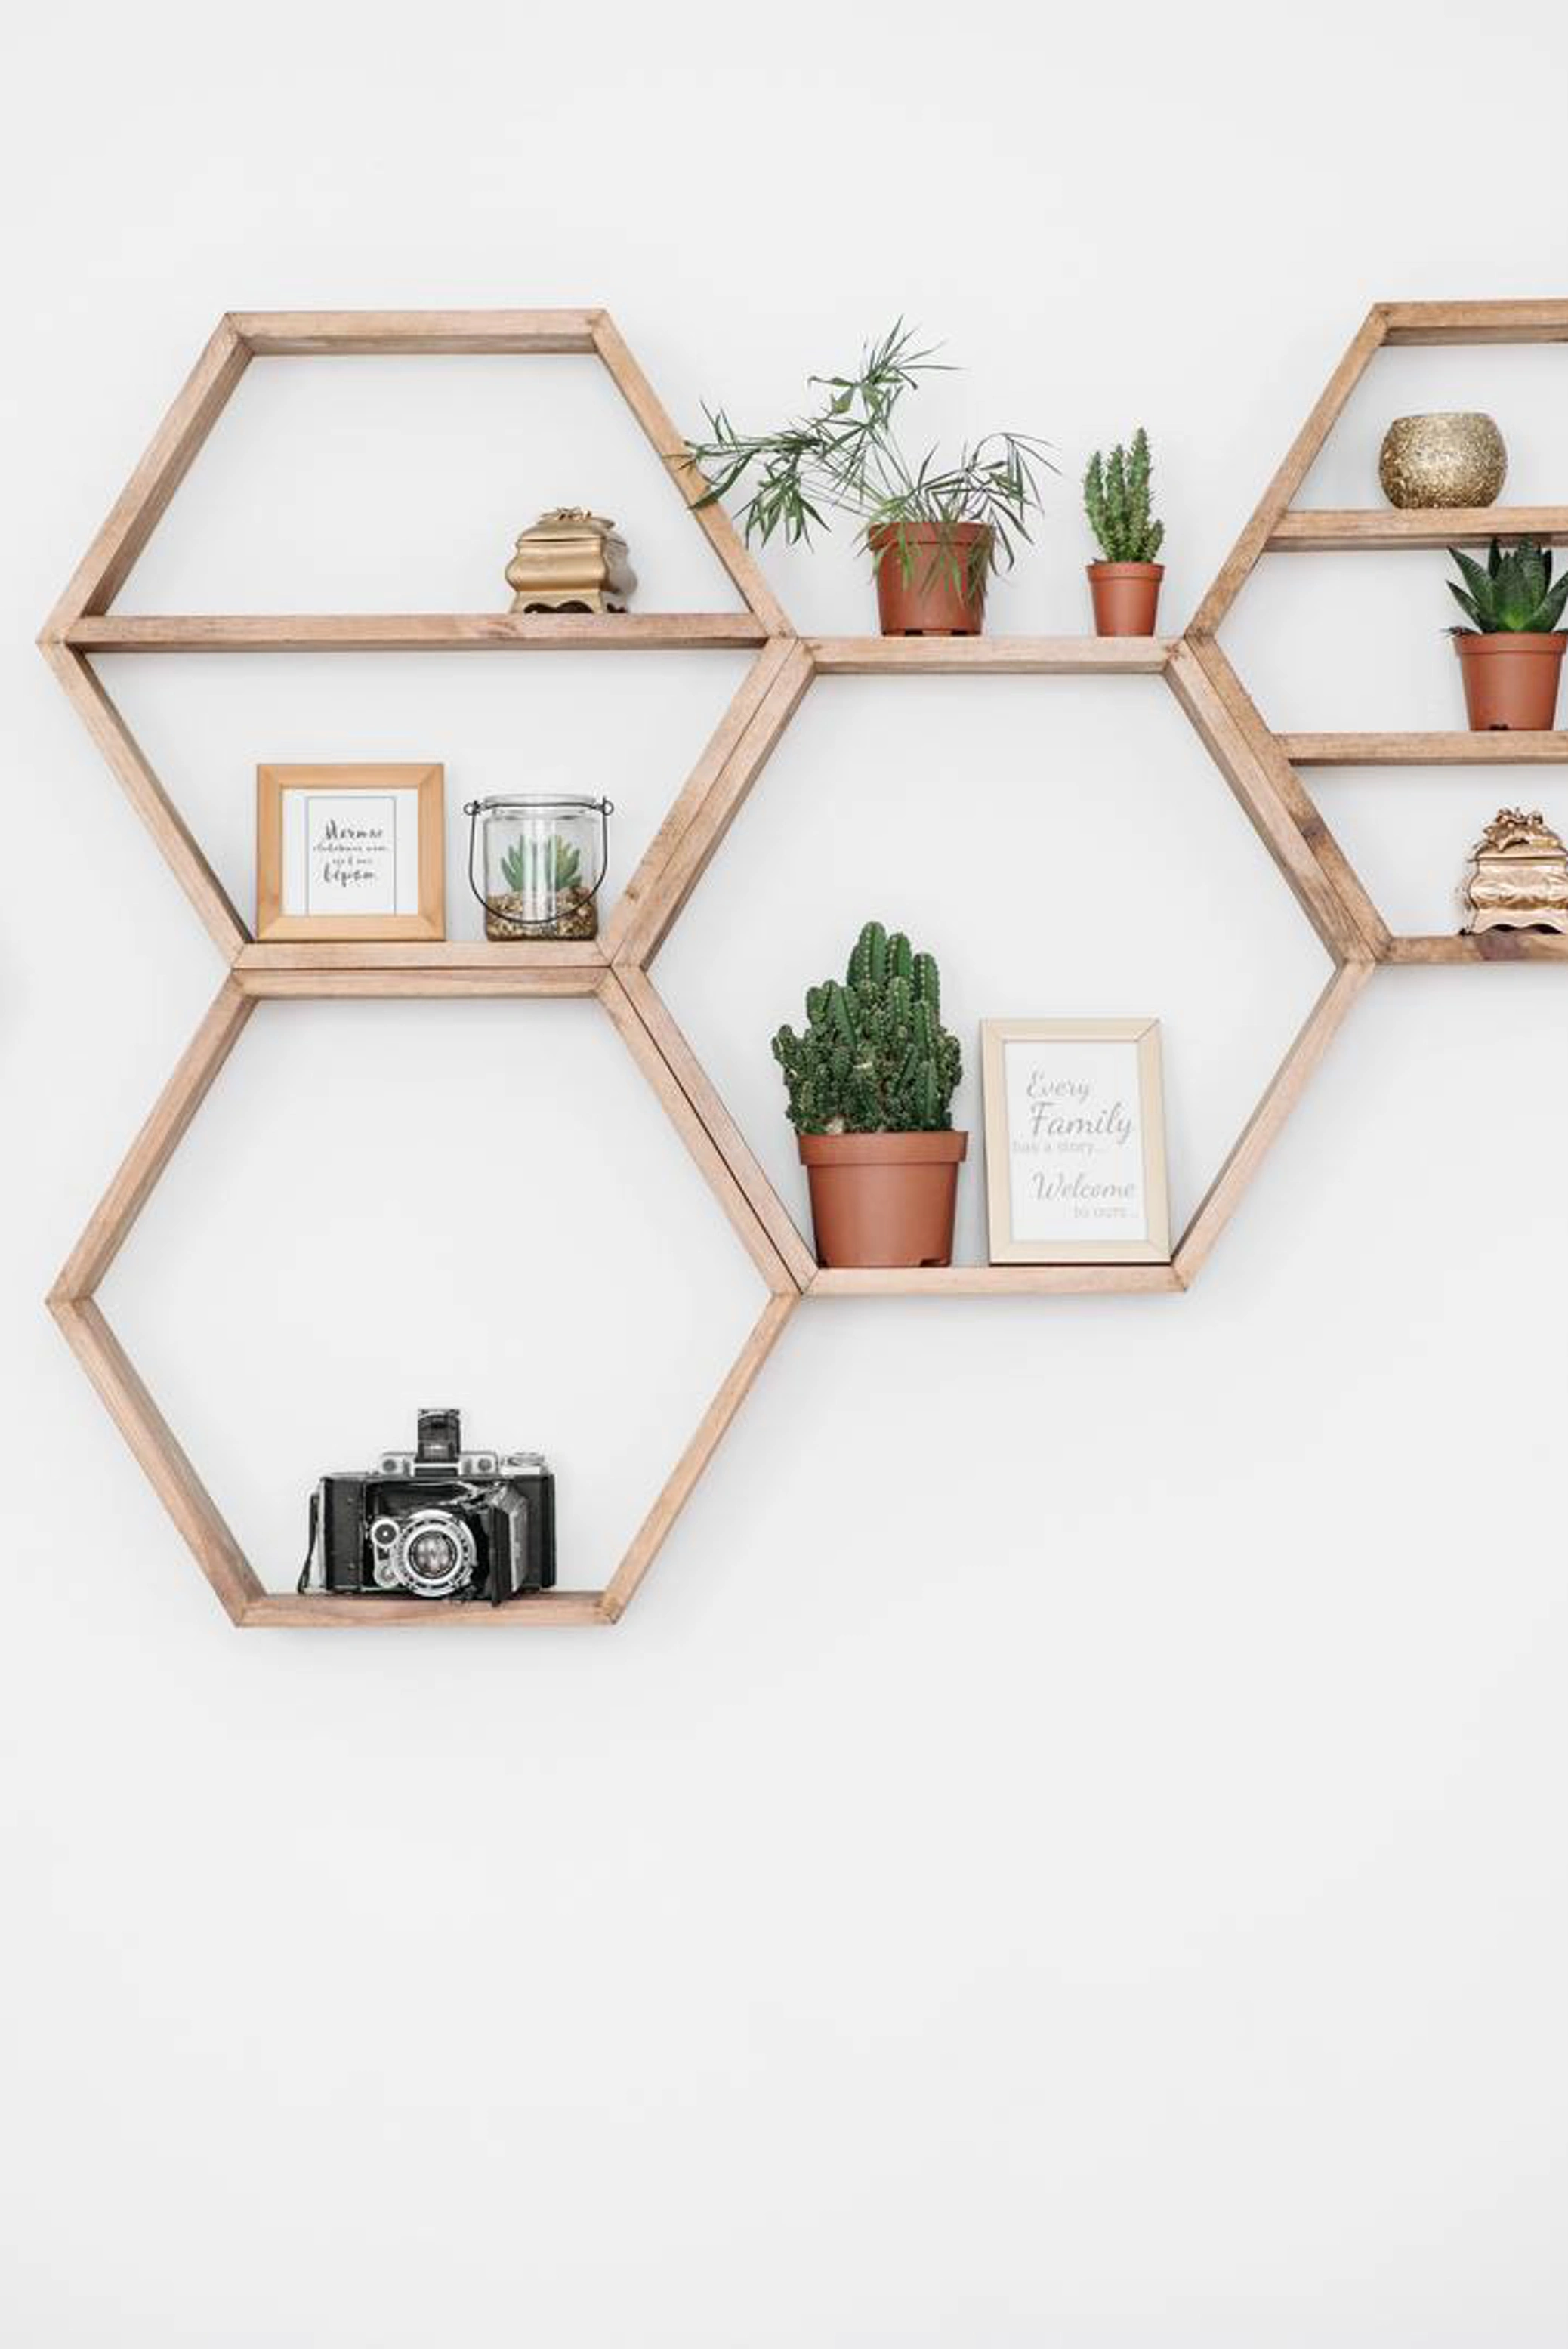 Hexagon wooden shelves